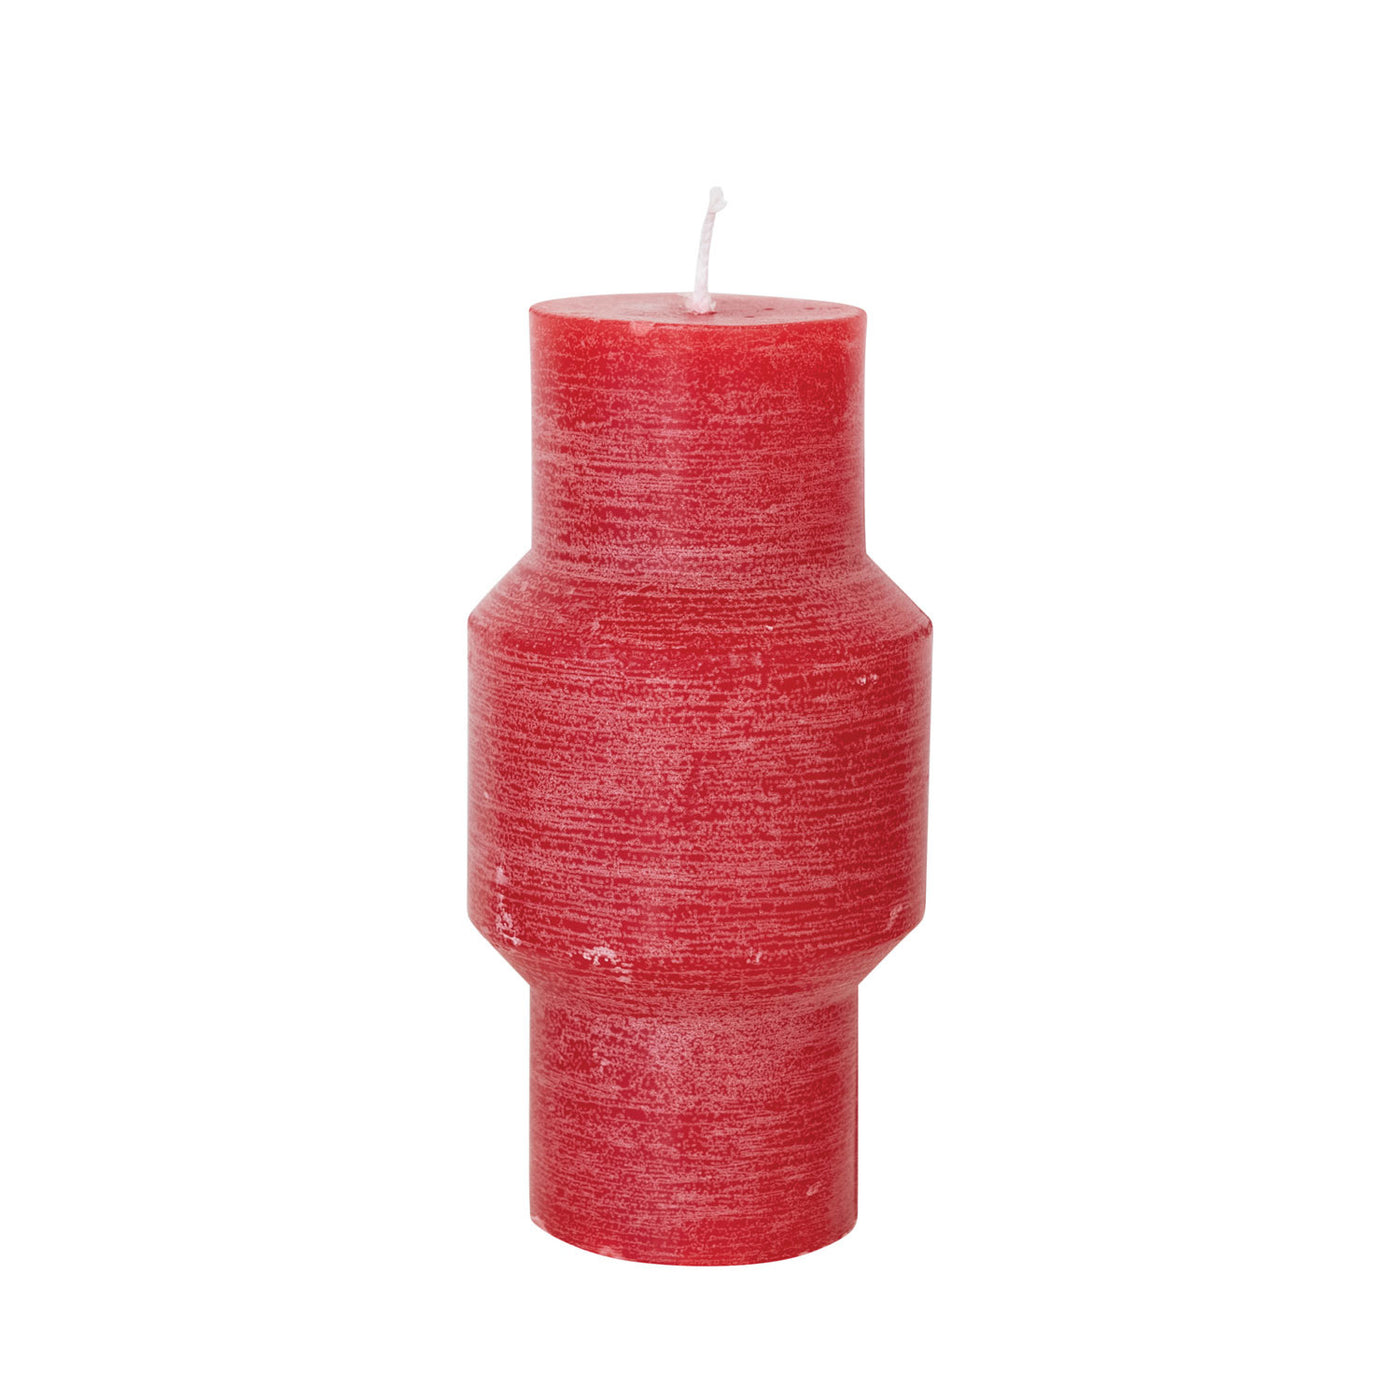 Medium Red Geometric Candle